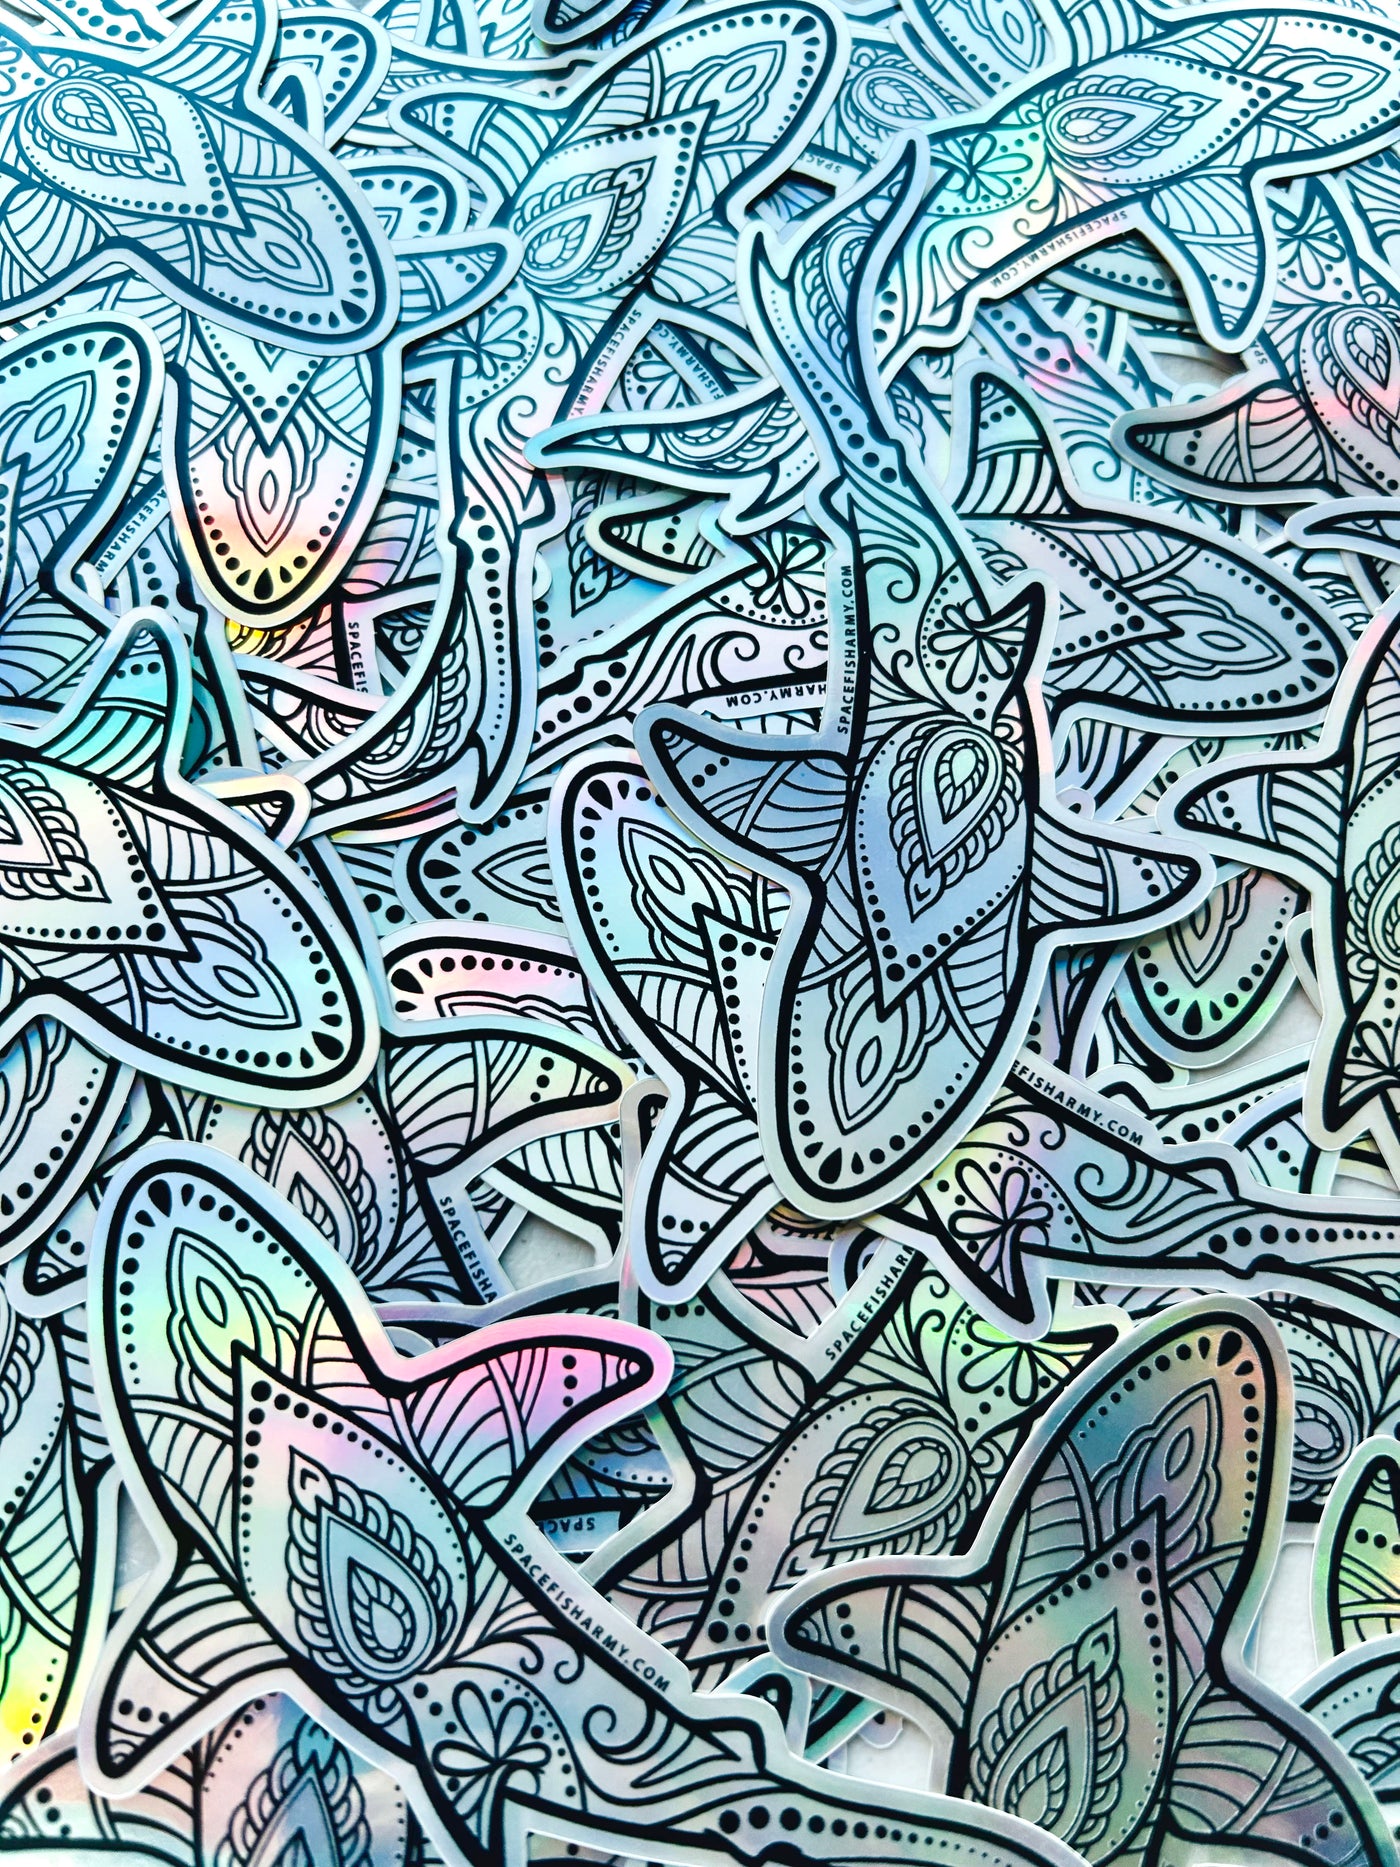 Holographic Shark Shakra Sticker